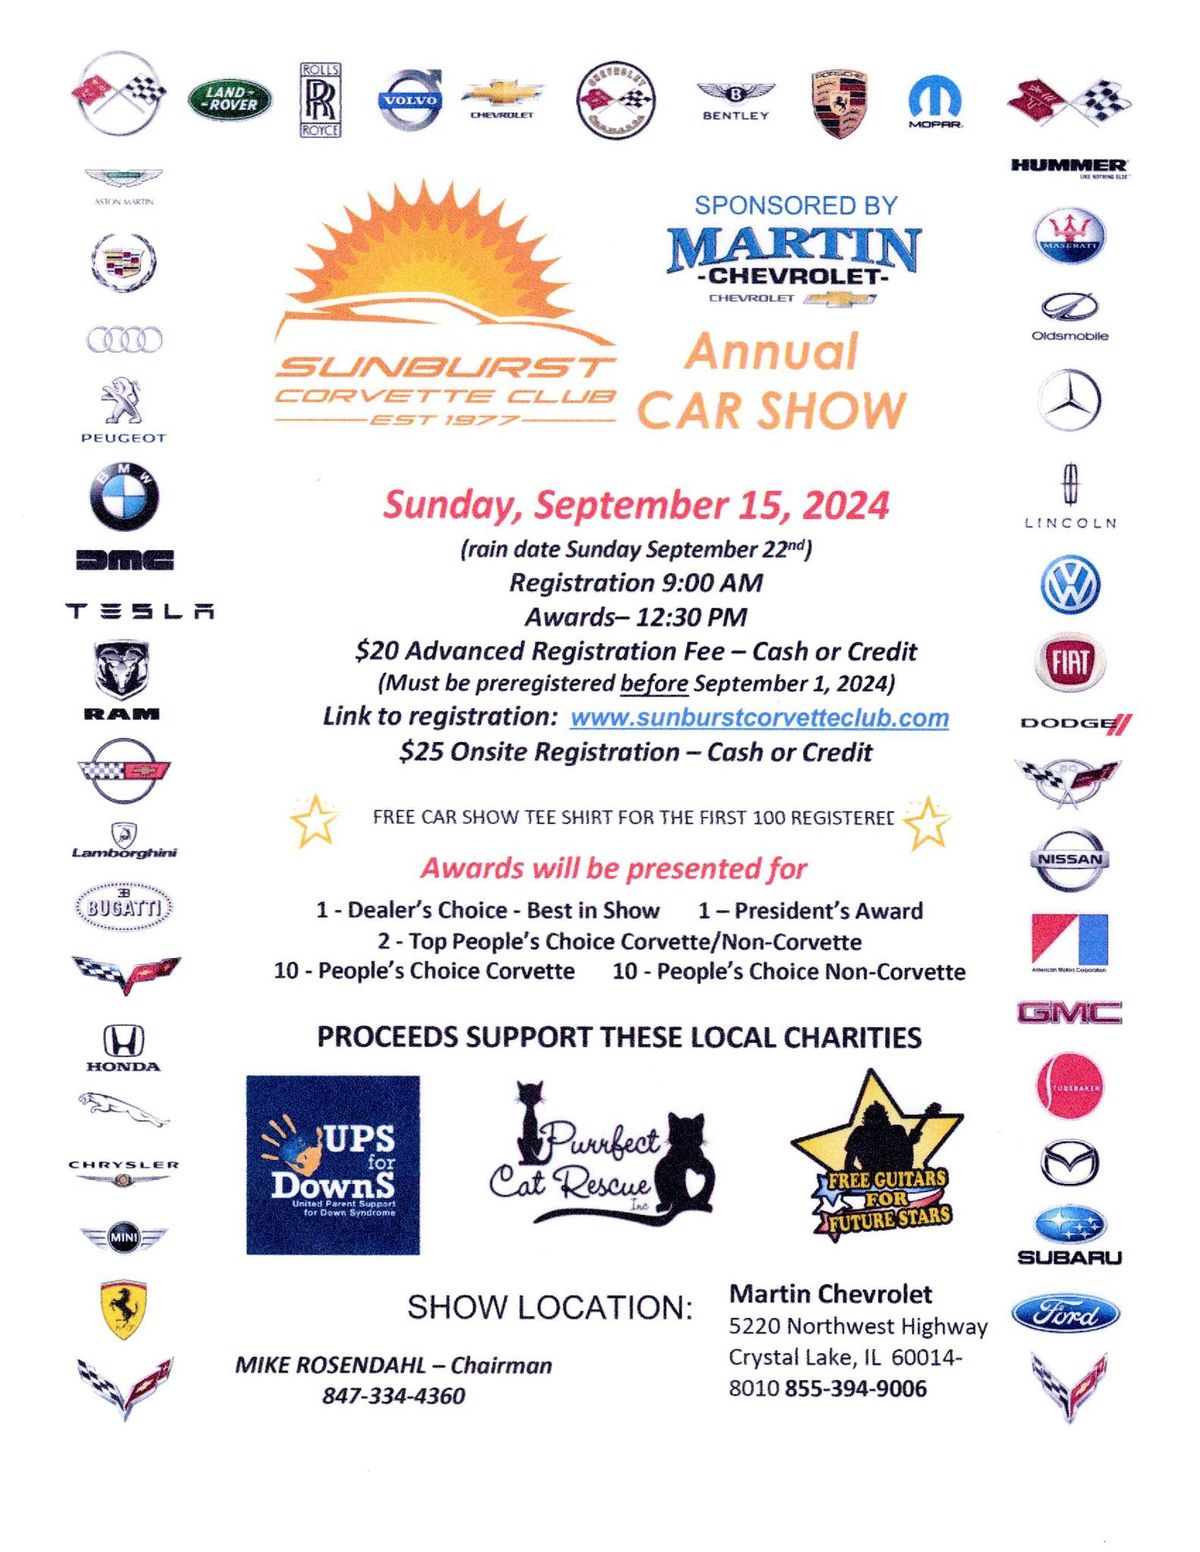 Sunburst Corvette Club Annual Car Show